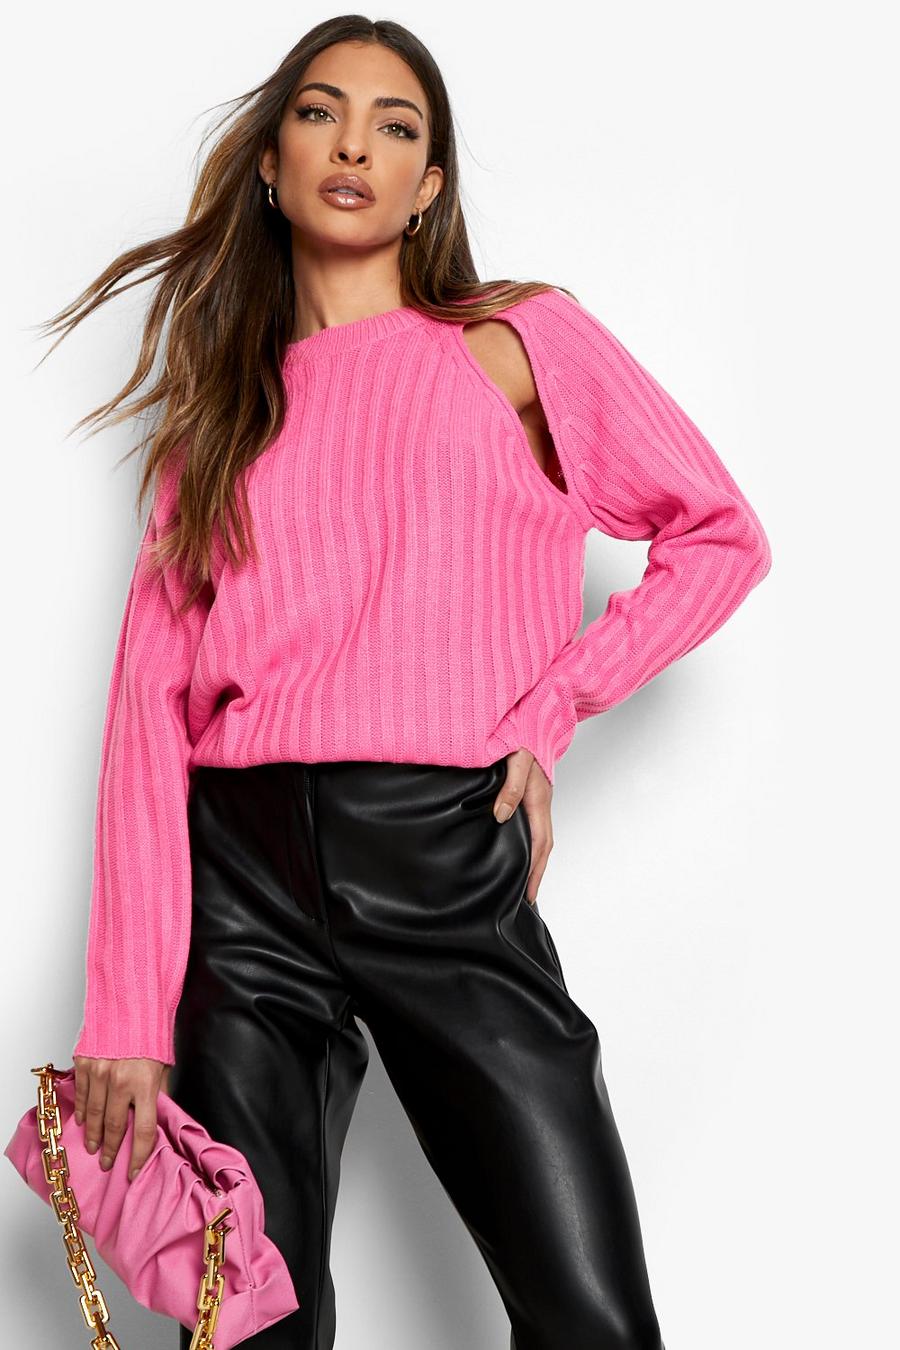 Gerippter Strick-Pullover mit Cut-Out am Ärmel, Bright pink rose image number 1